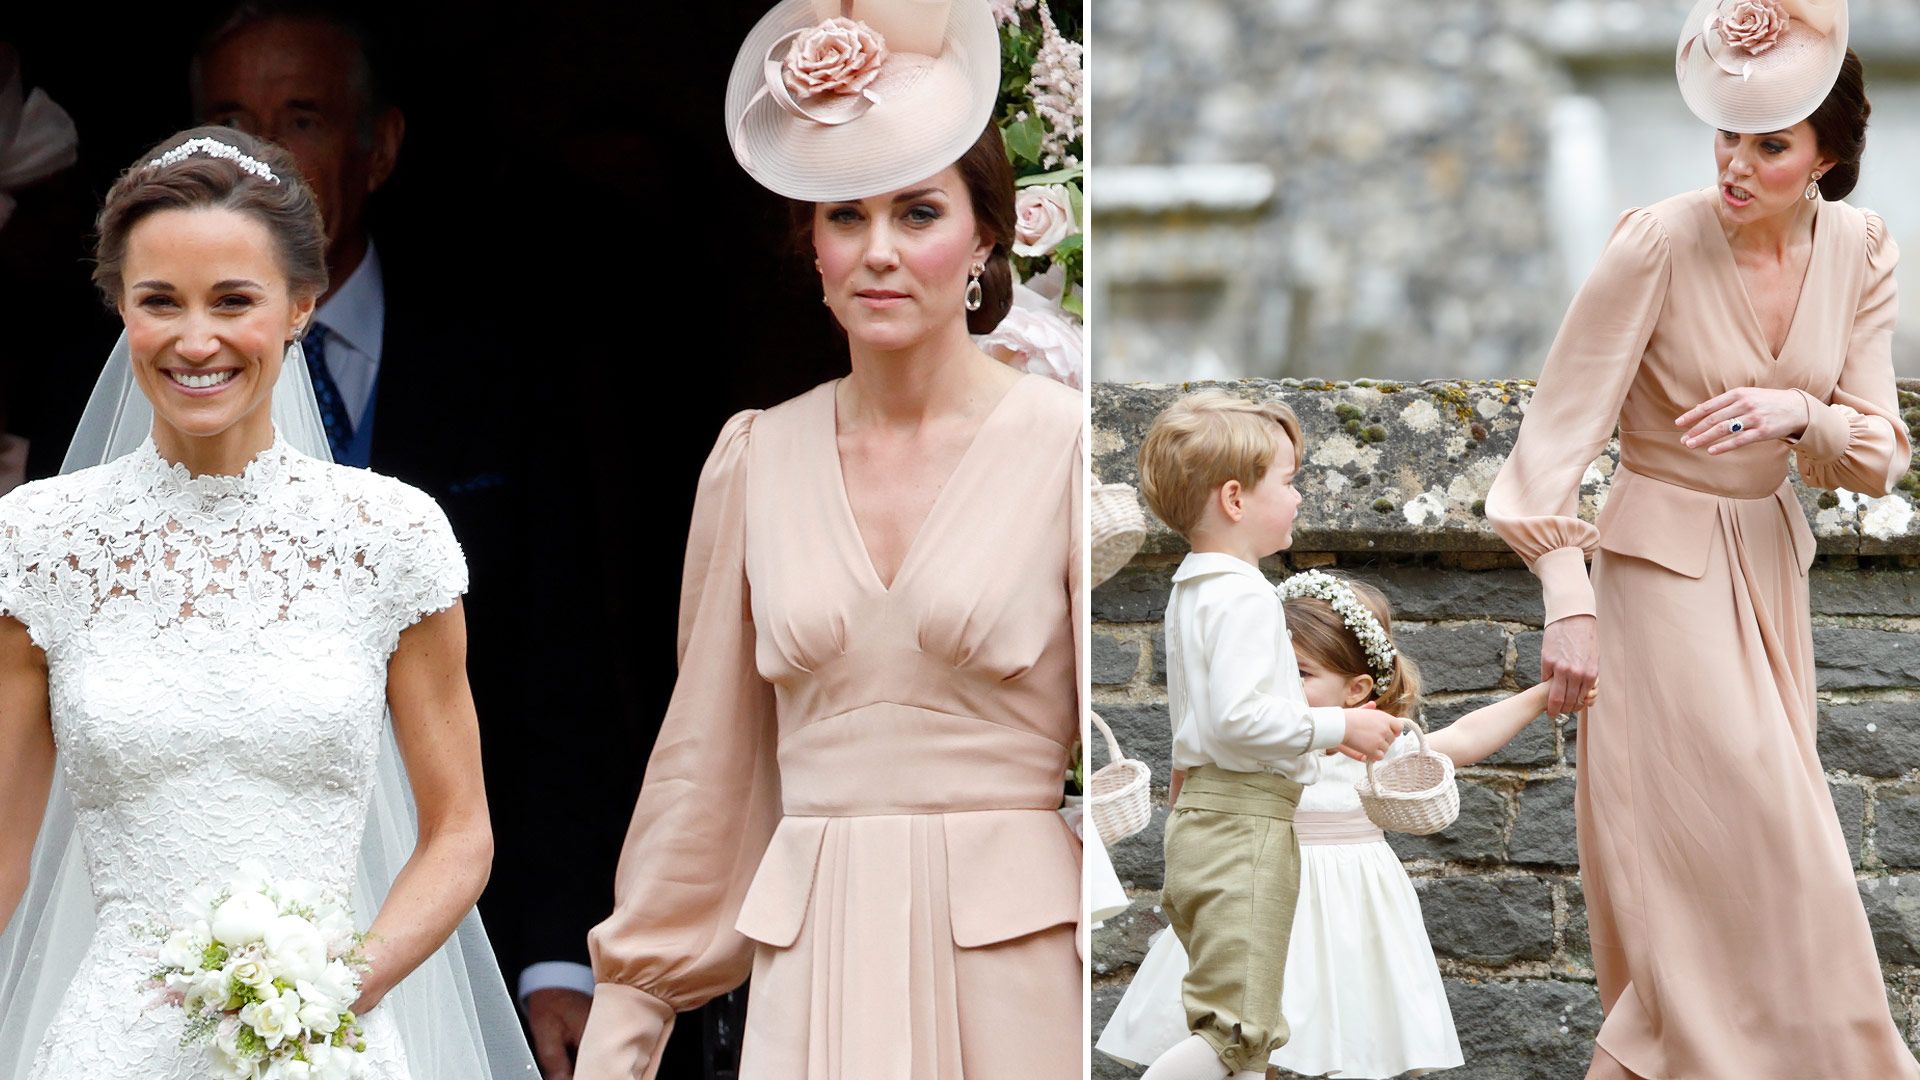 Princess Kate at Pippa Middleton's wedding with Prince George